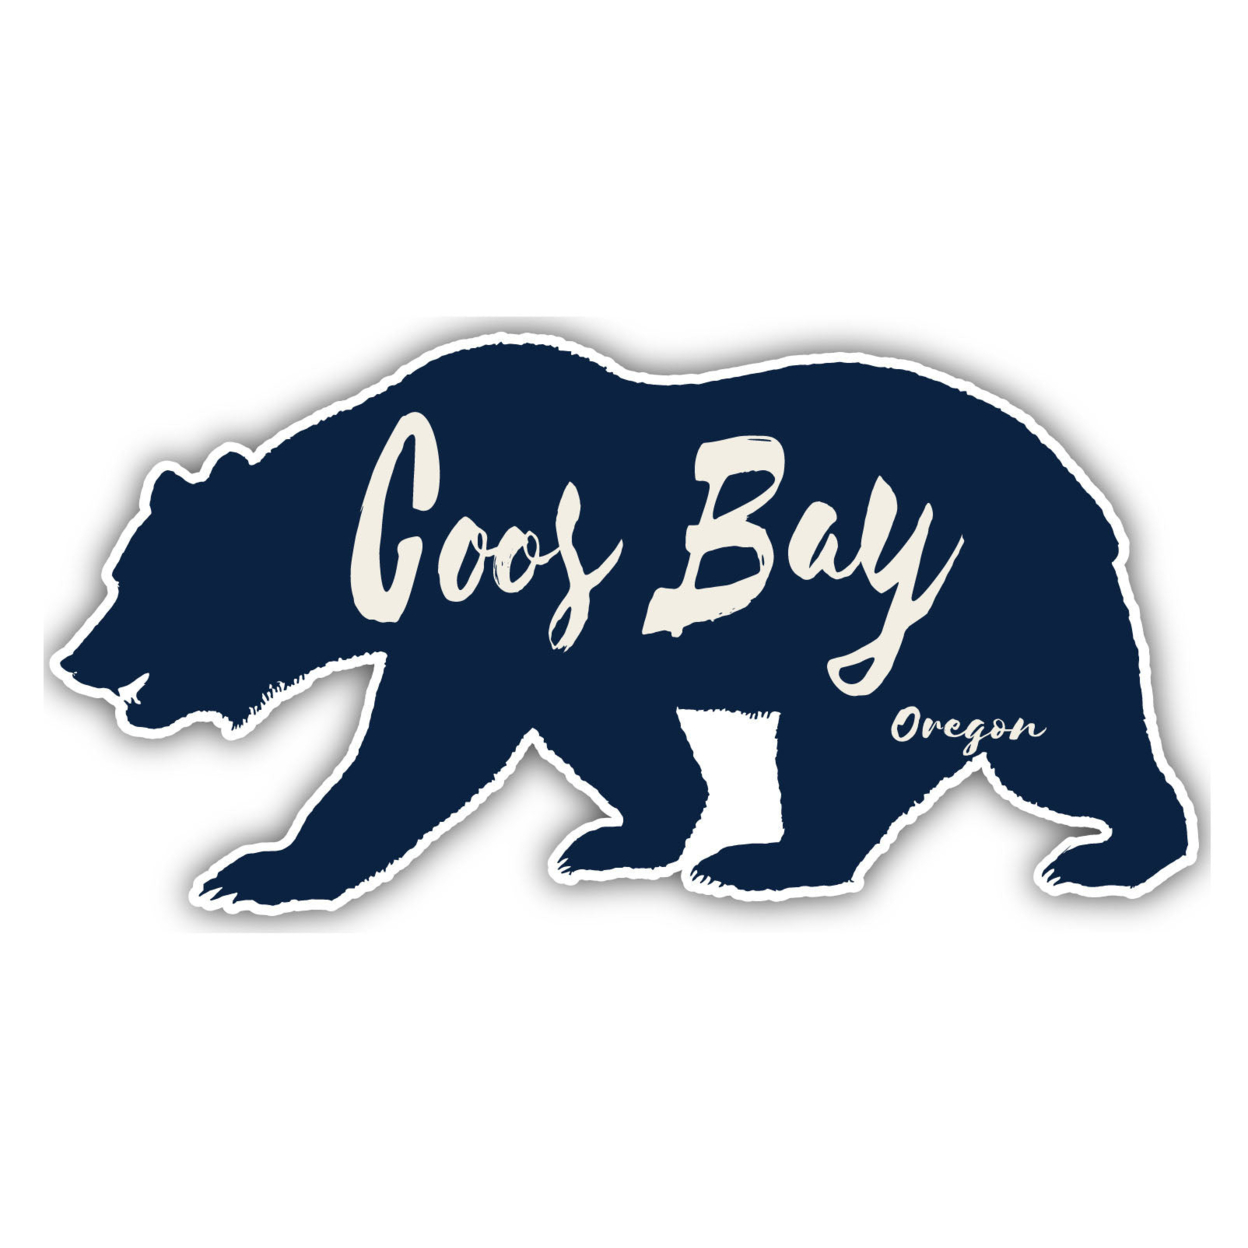 Coos Bay Oregon Souvenir Decorative Stickers (Choose Theme And Size) - Single Unit, 10-Inch, Bear